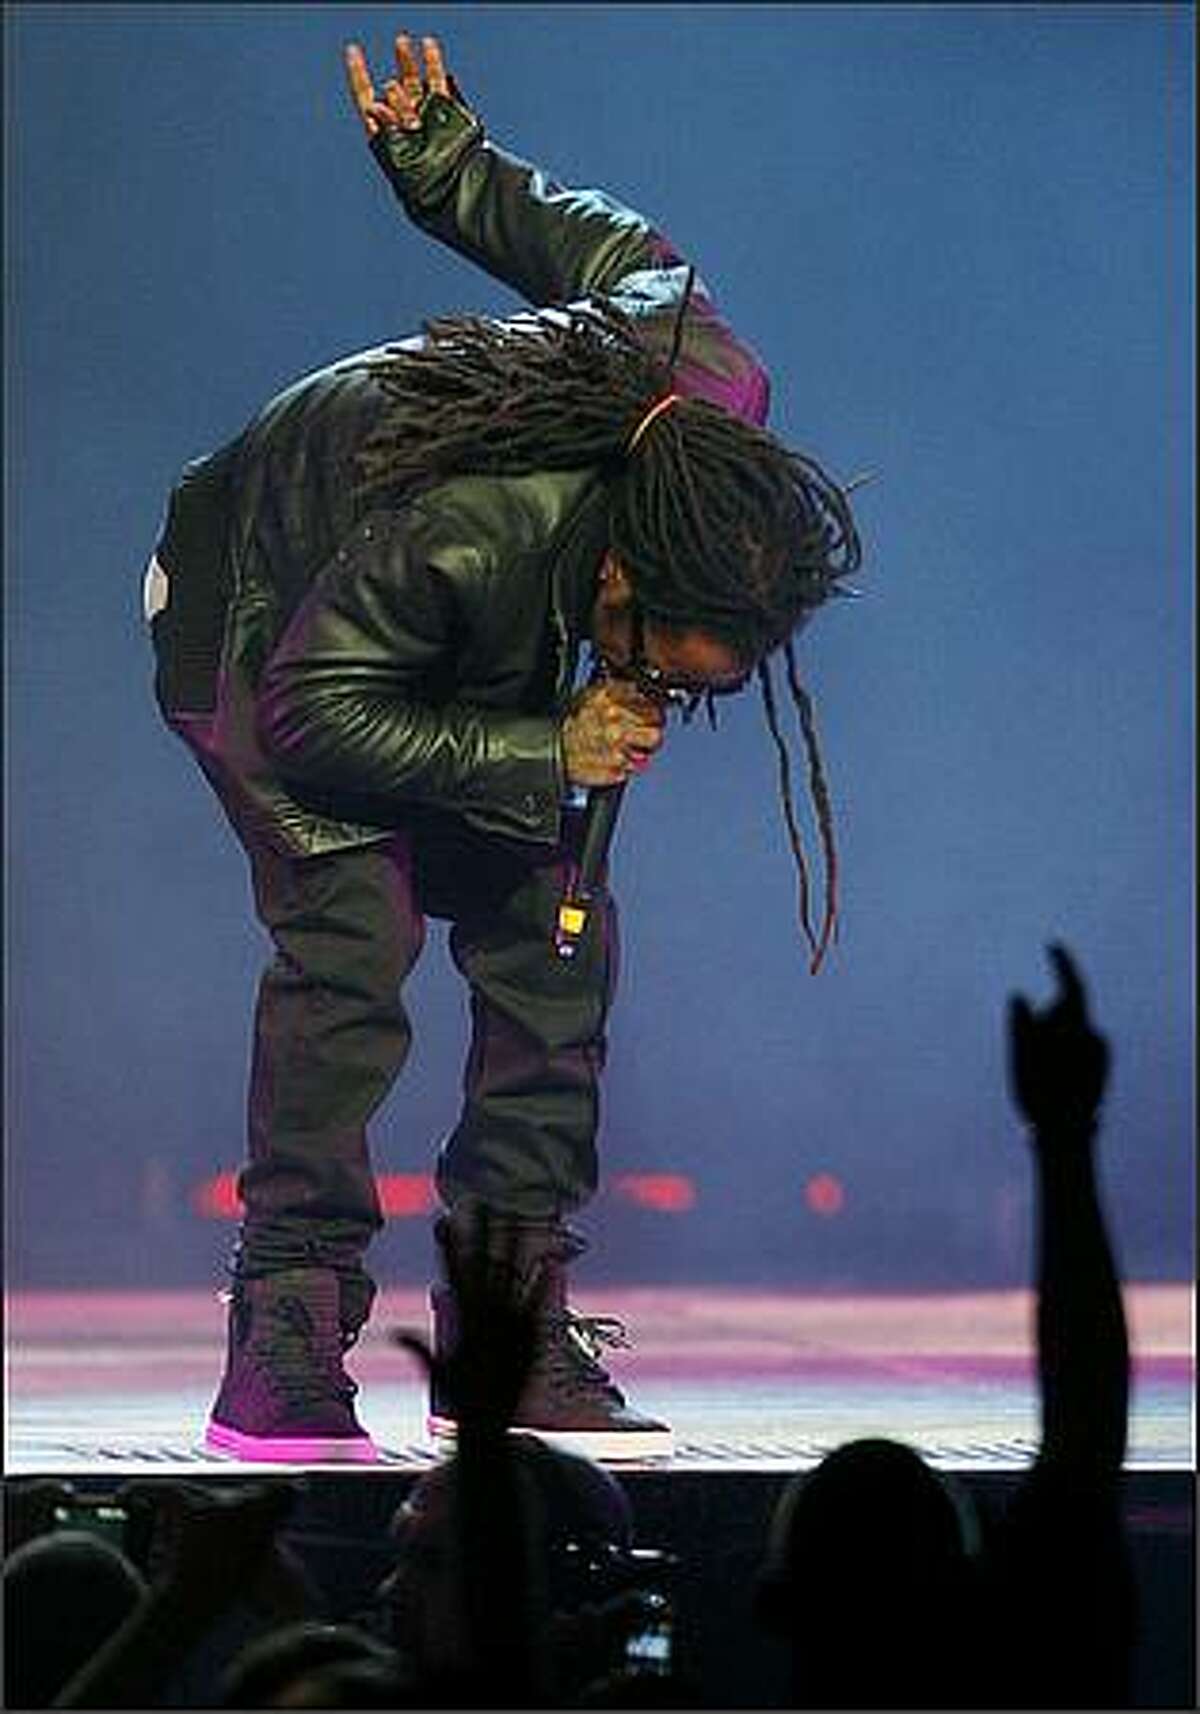 Lil Wayne performs at KeyArena in Seattle on Sunday, January 25, 2009.